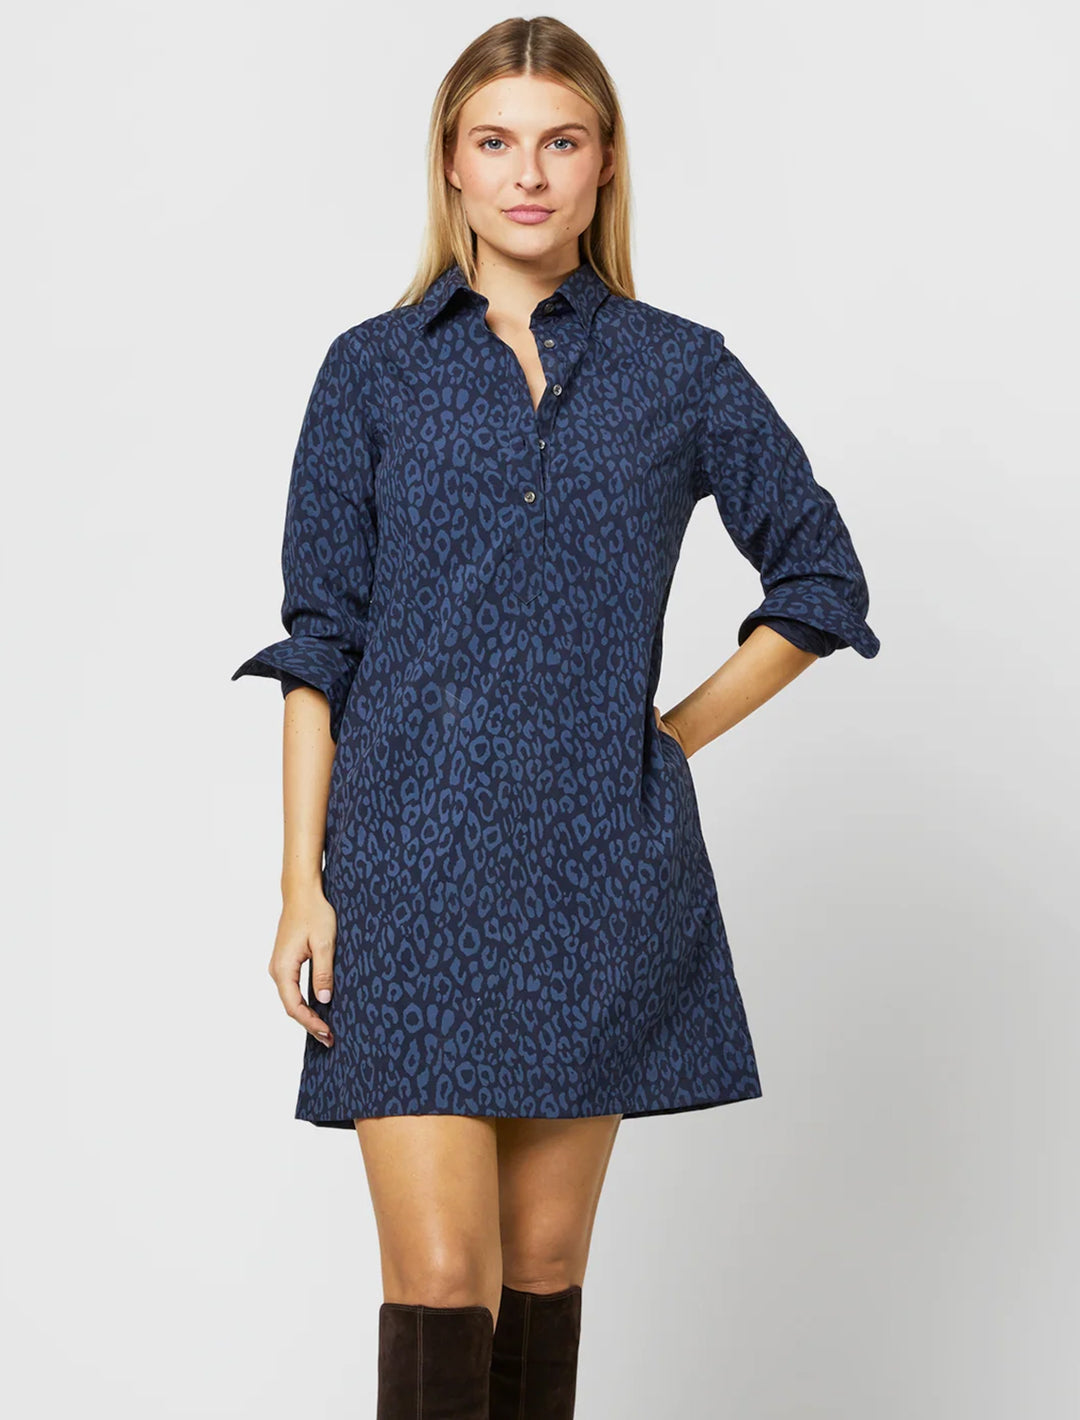 Model wearing Ann Mashburn's long sleeve popover dress in blue and navy leopard.